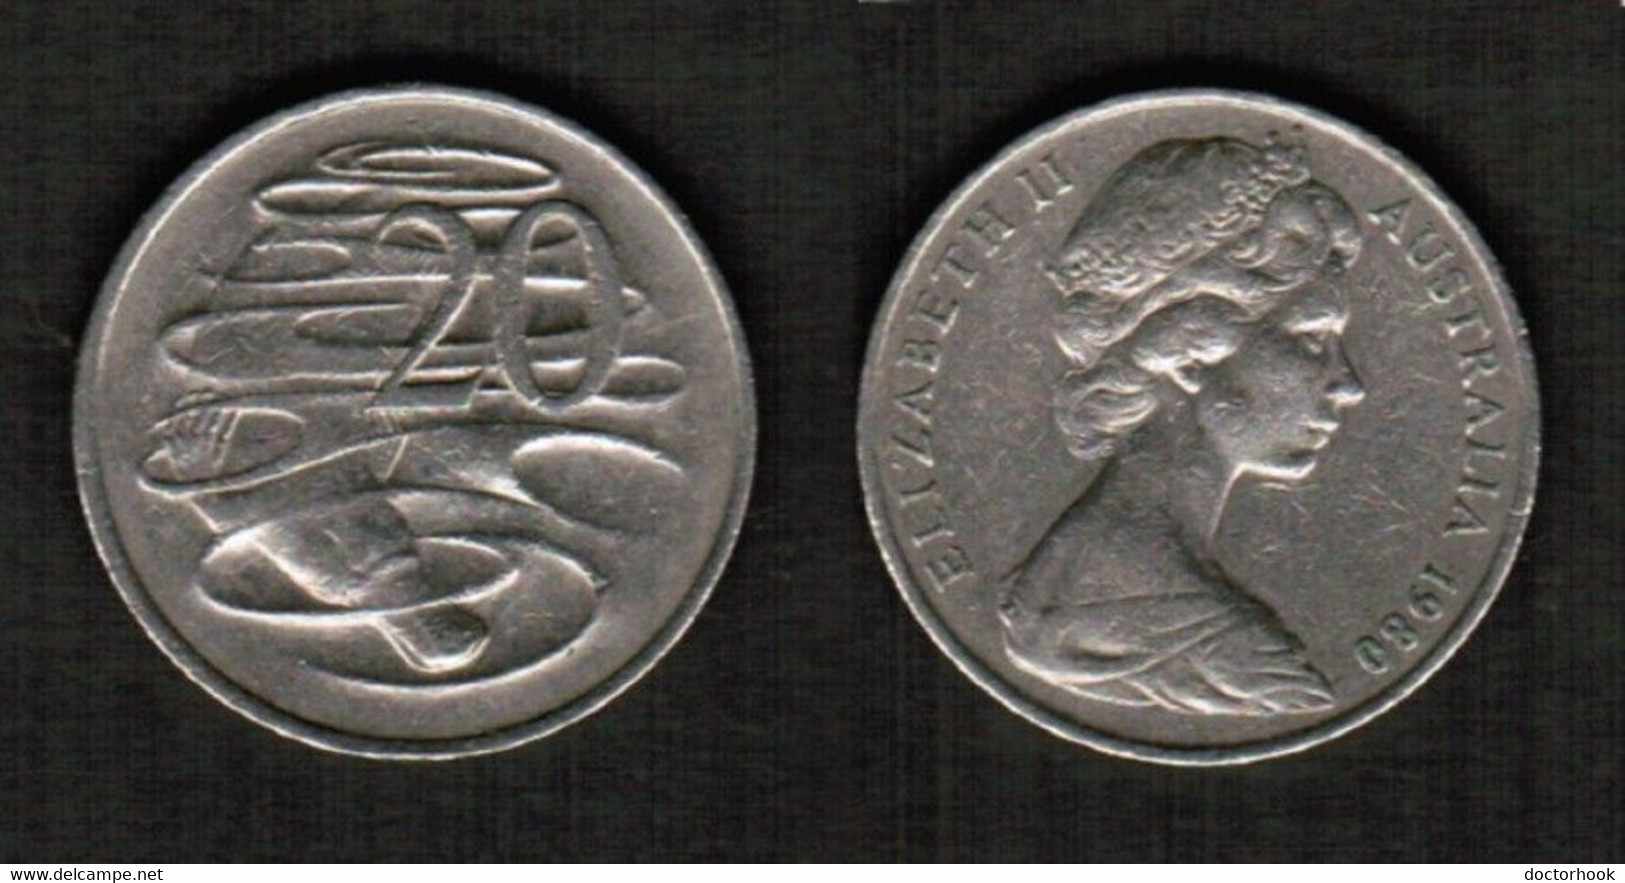 AUSTRALIA  20 CENTS 1980 (KM # 66) #6390 - 20 Cents